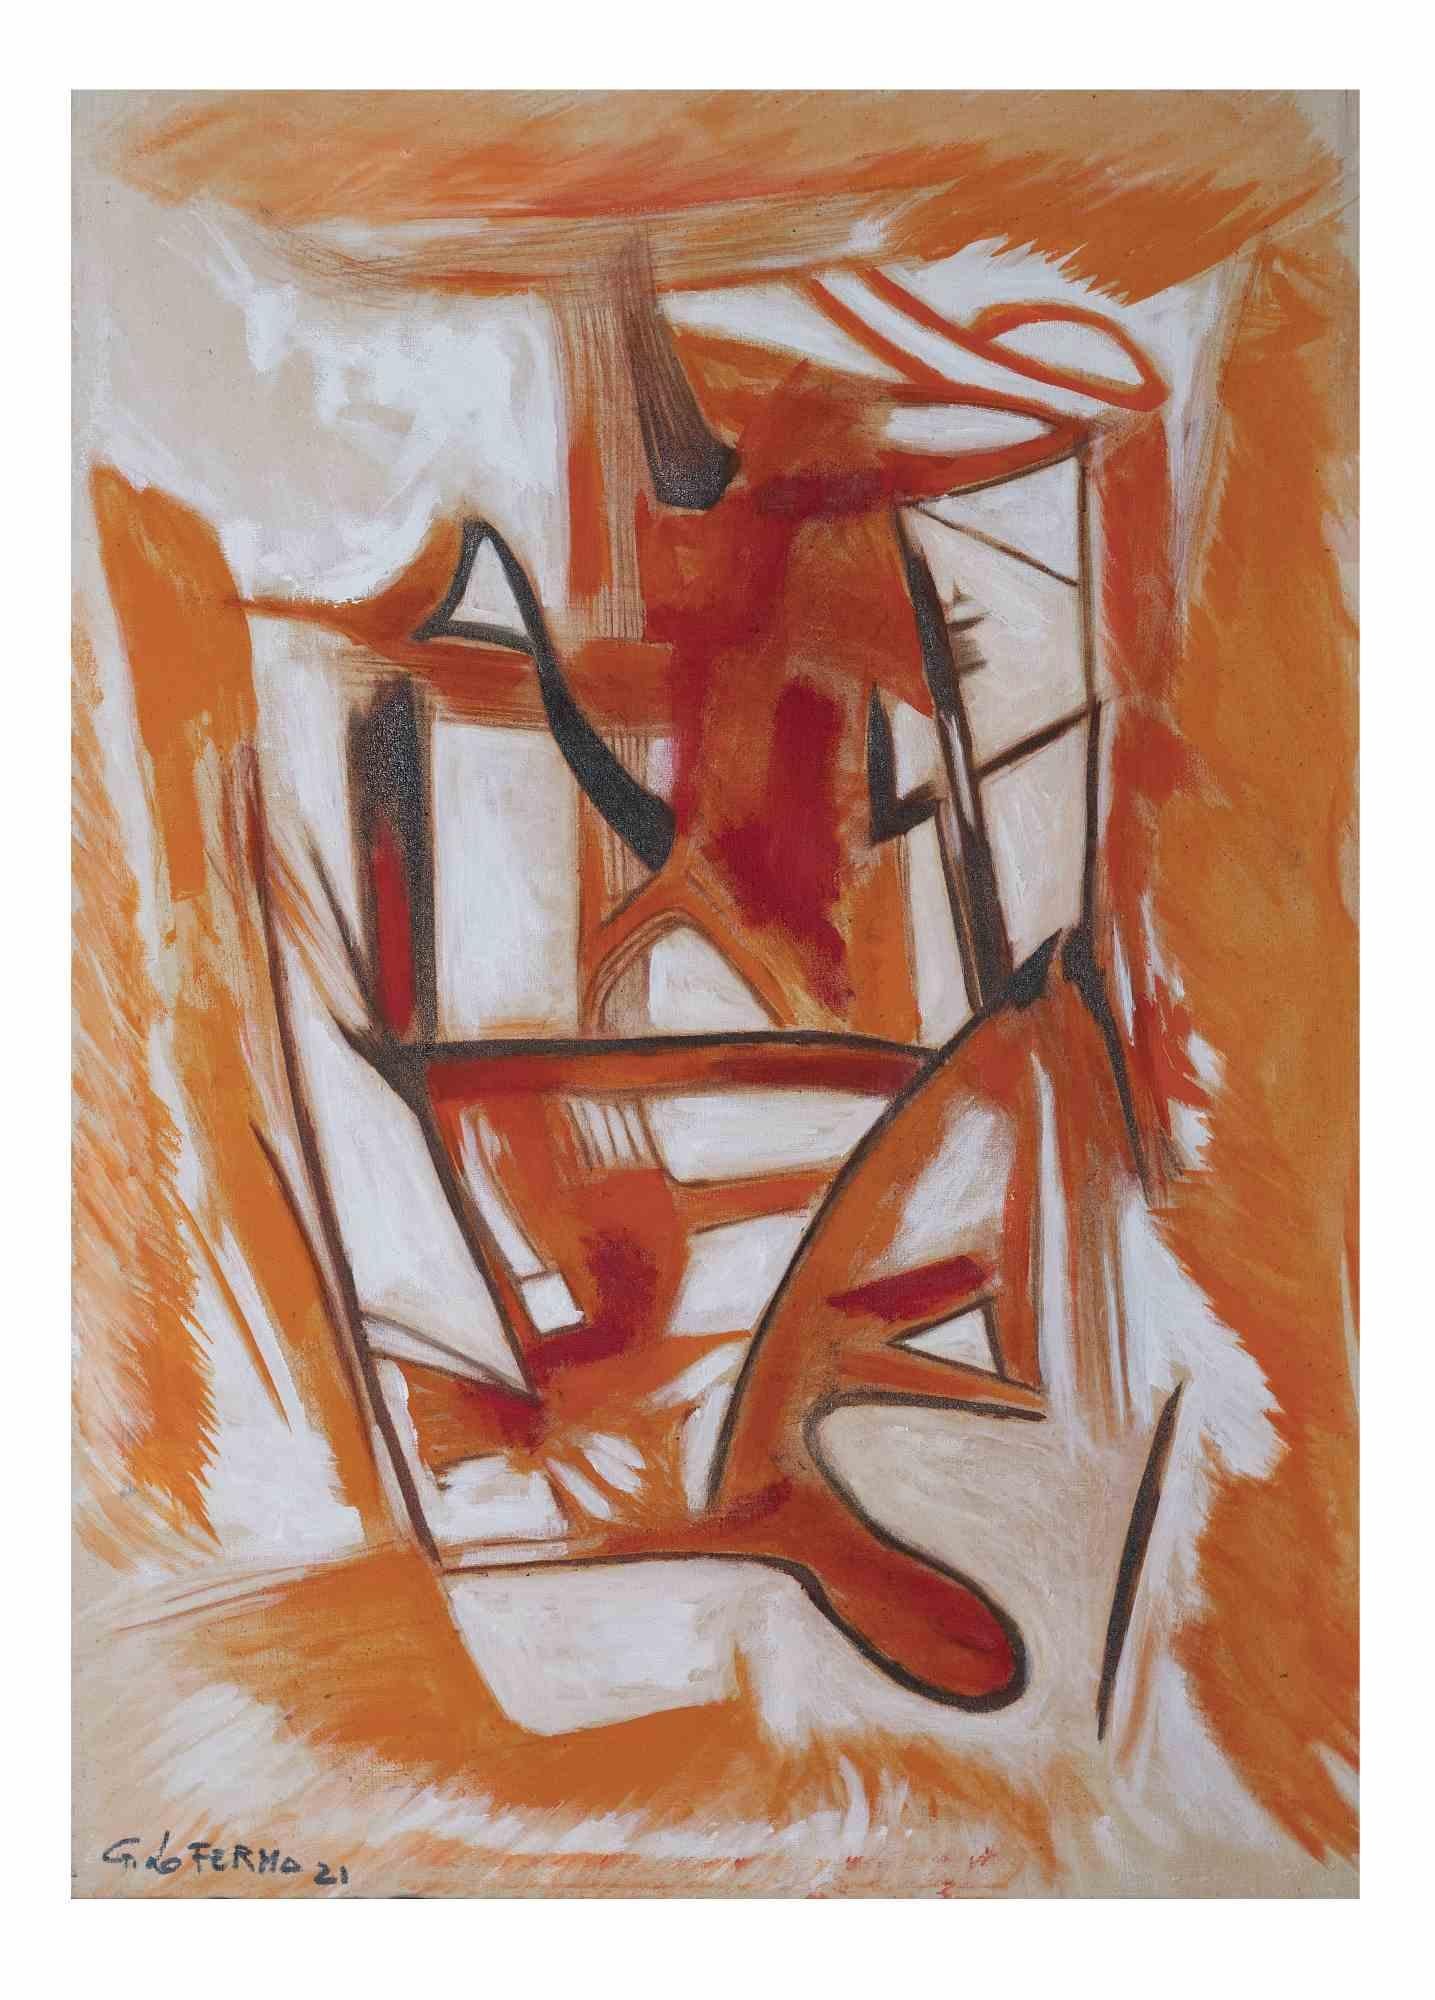 Orange Abstract Composition - Oil On Canvas by Giorgio Lo Fermo - 2021